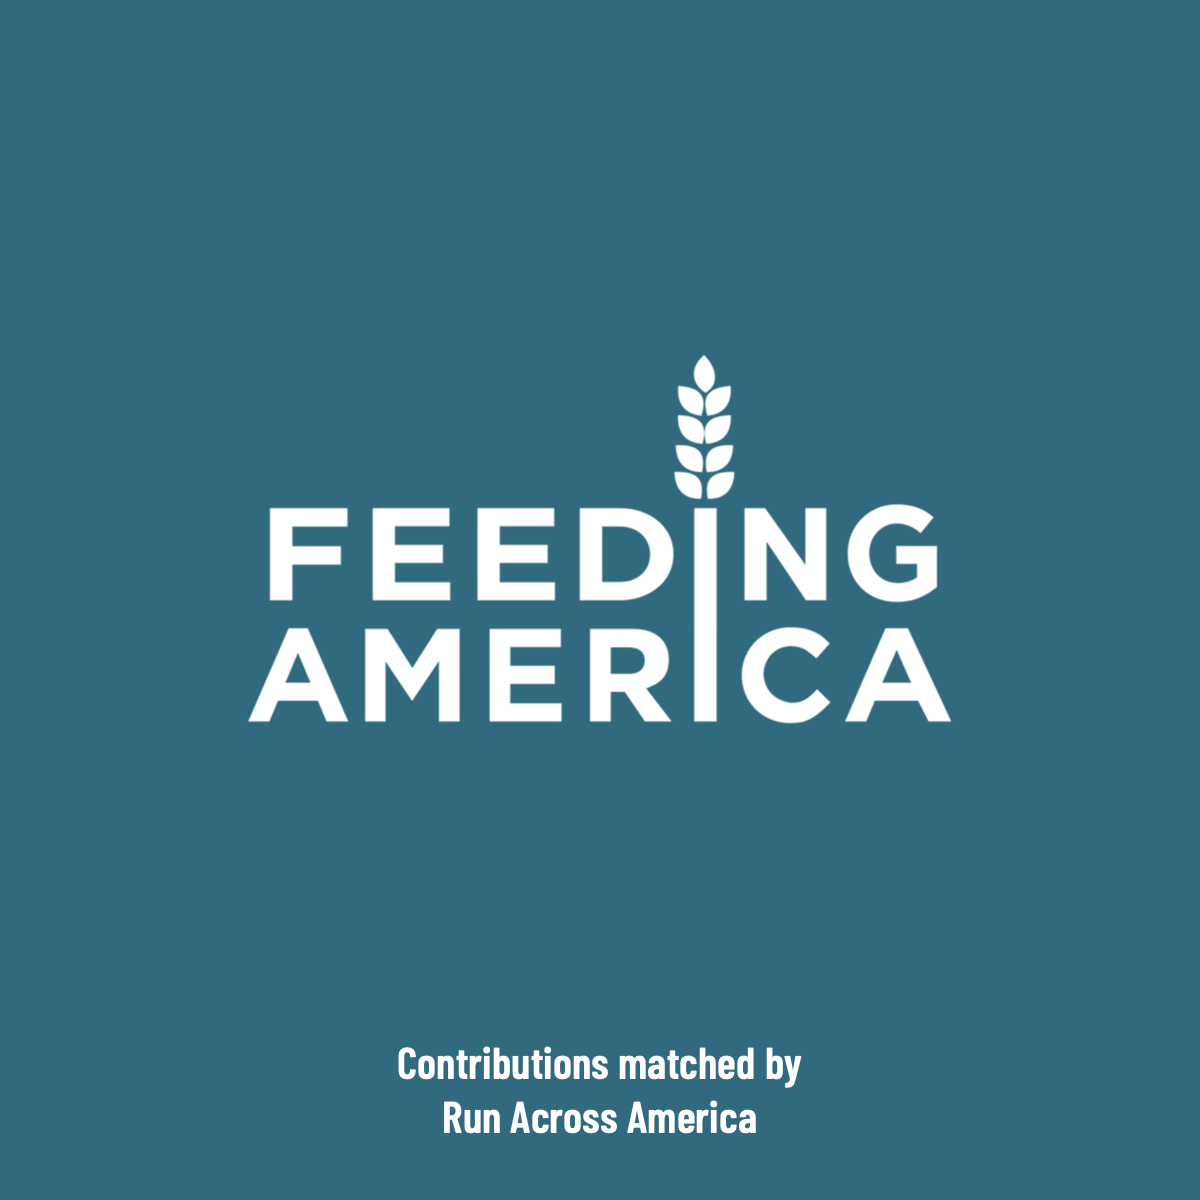 Contribute to Feeding America